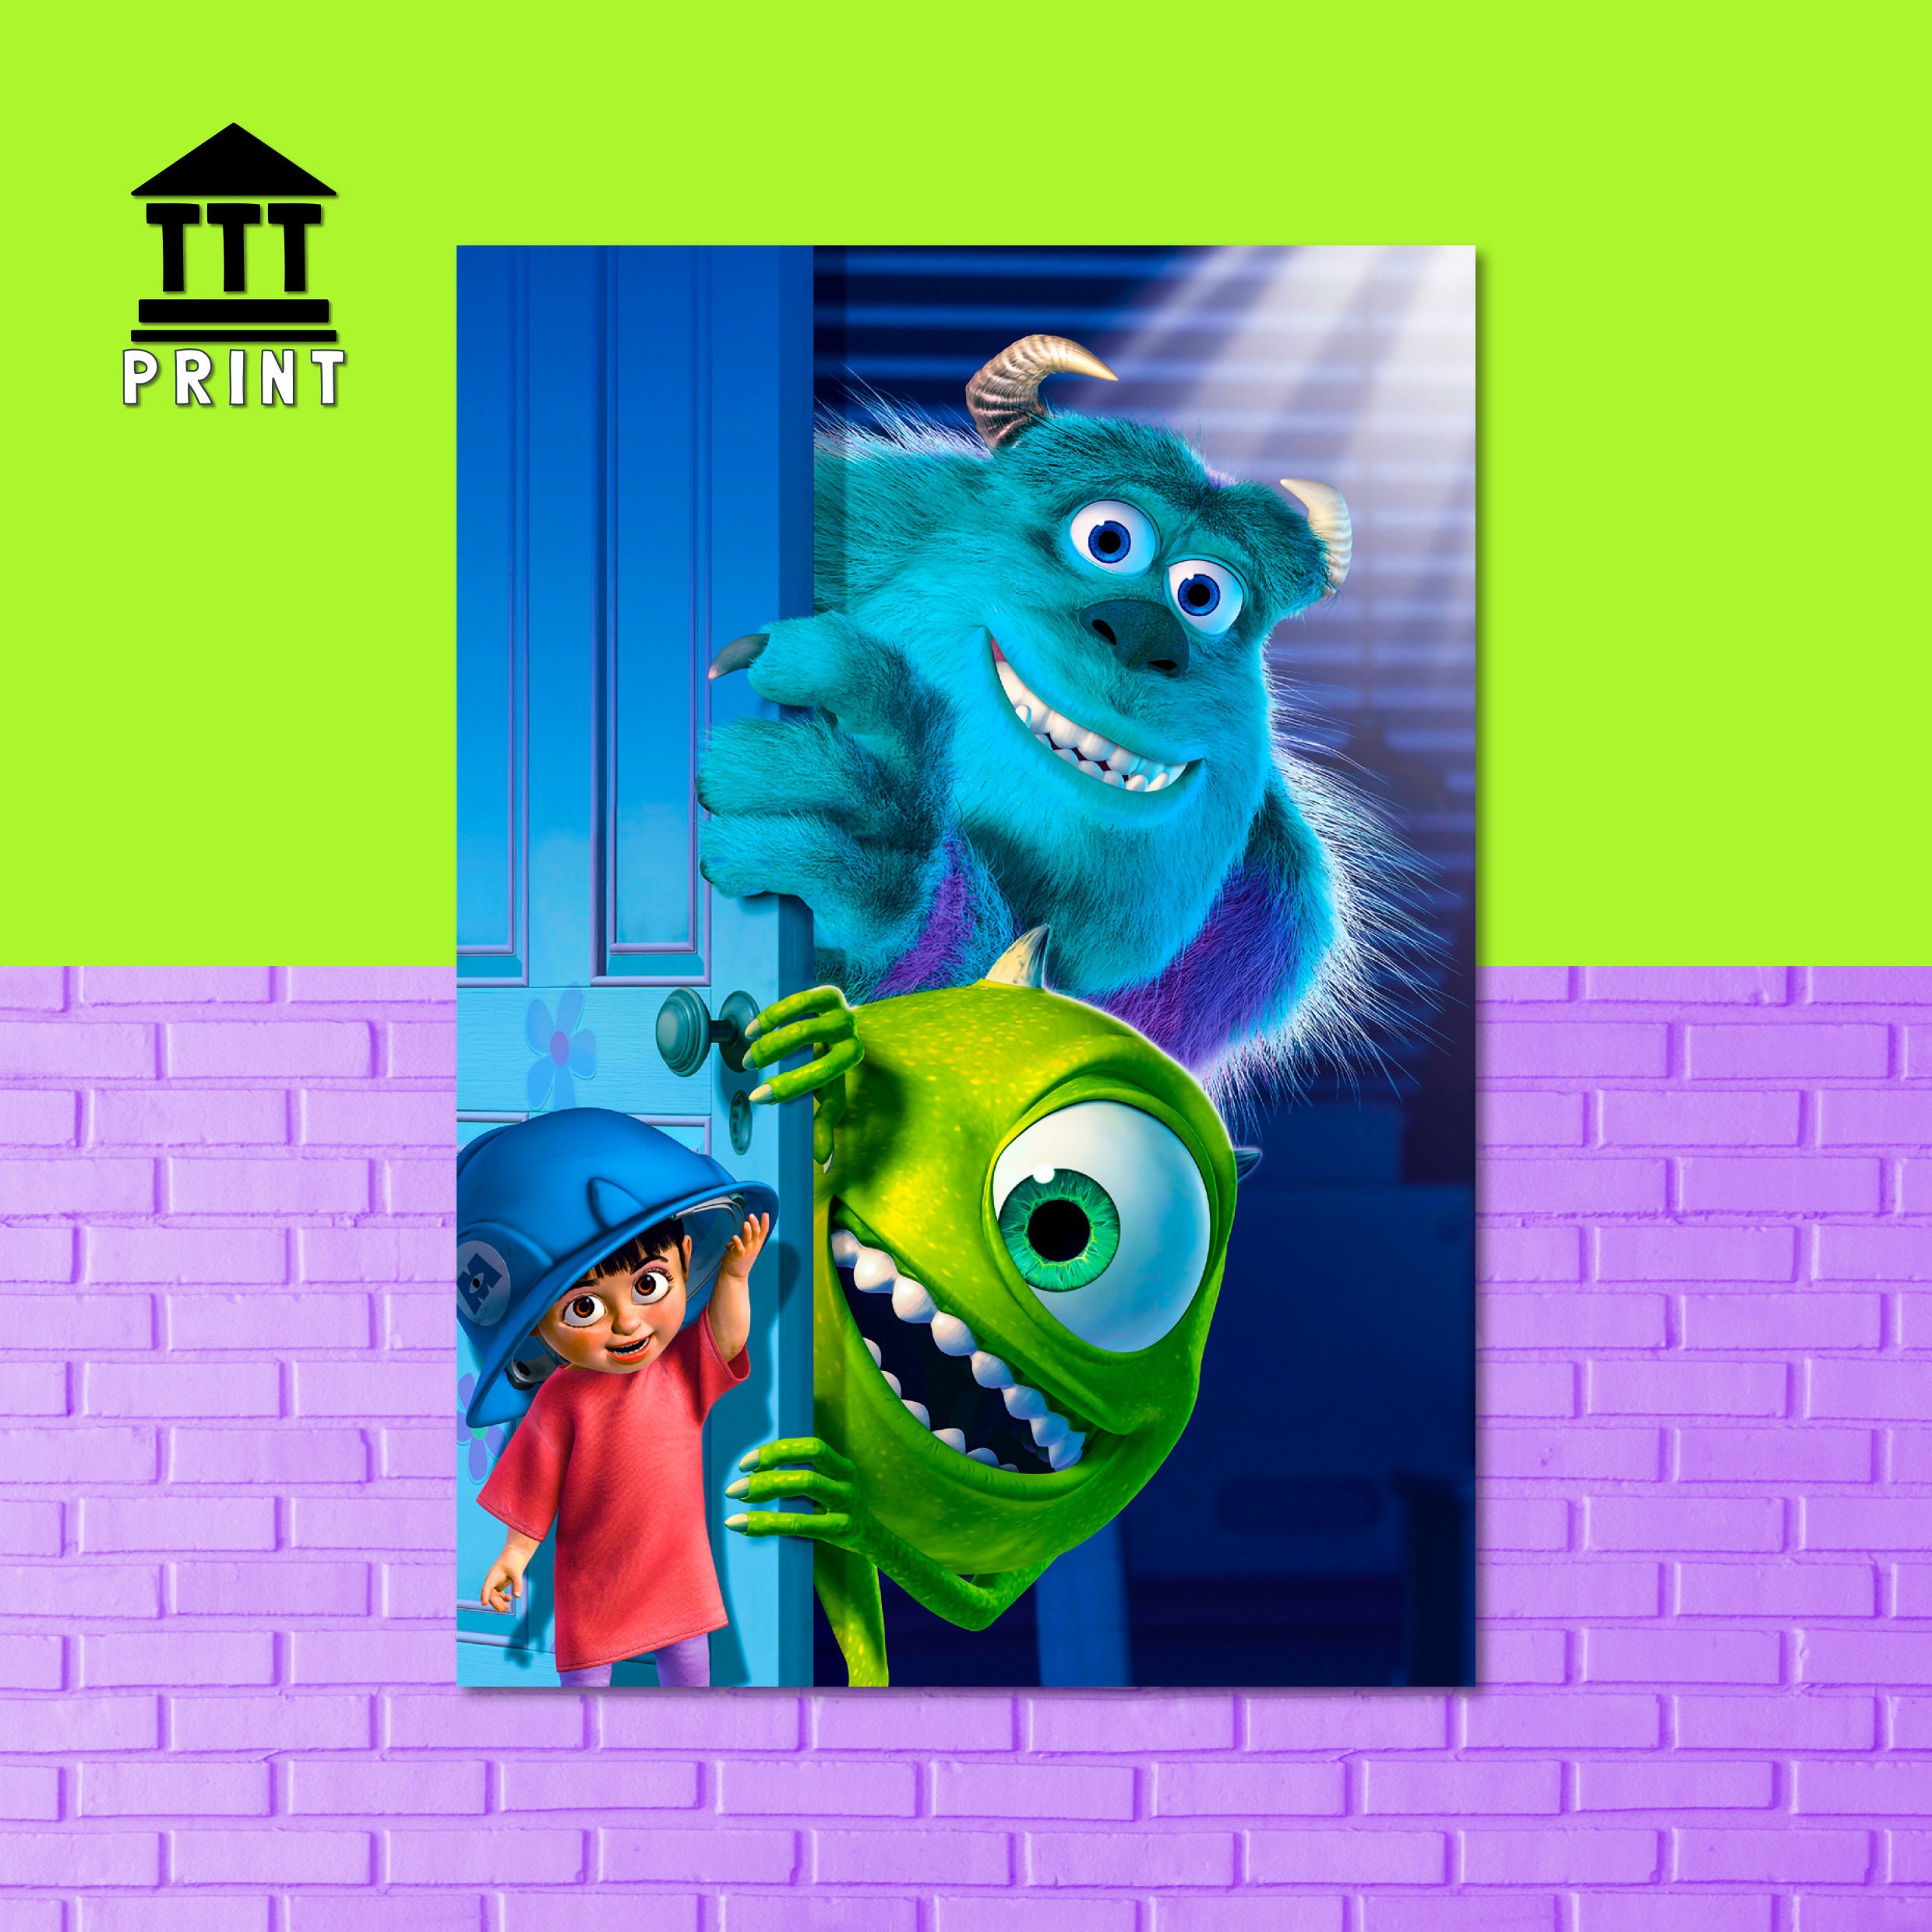 Gallery Pops Disney Pixar Monsters Inc. - Mike, Sully, Boo Wall Art Bundle (3-Pack)